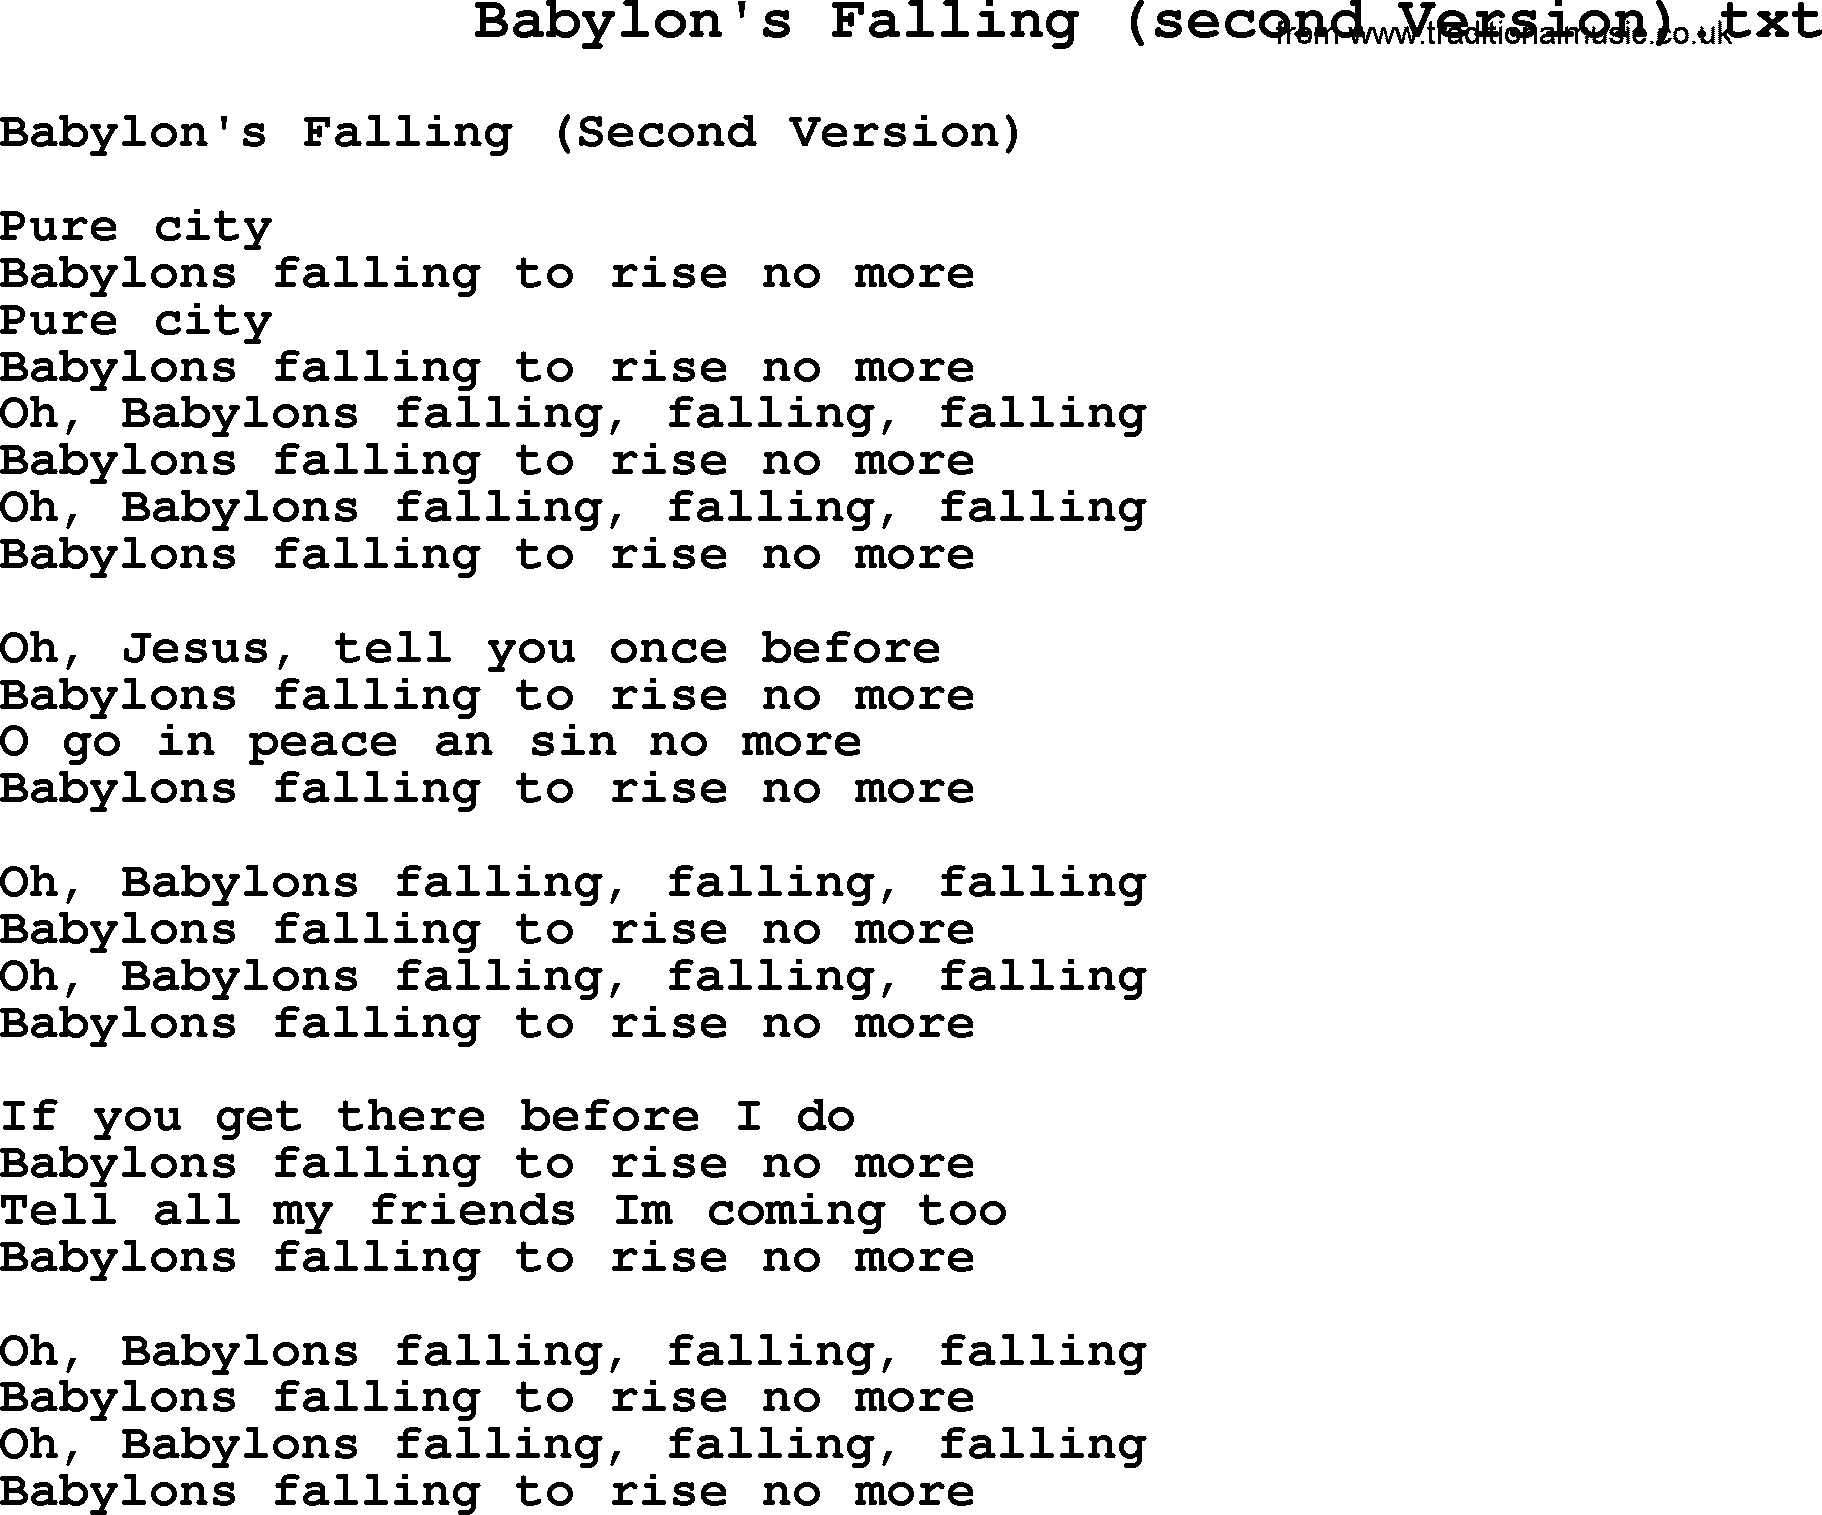 Negro Spiritual Song Lyrics for Babylon's Falling(2)